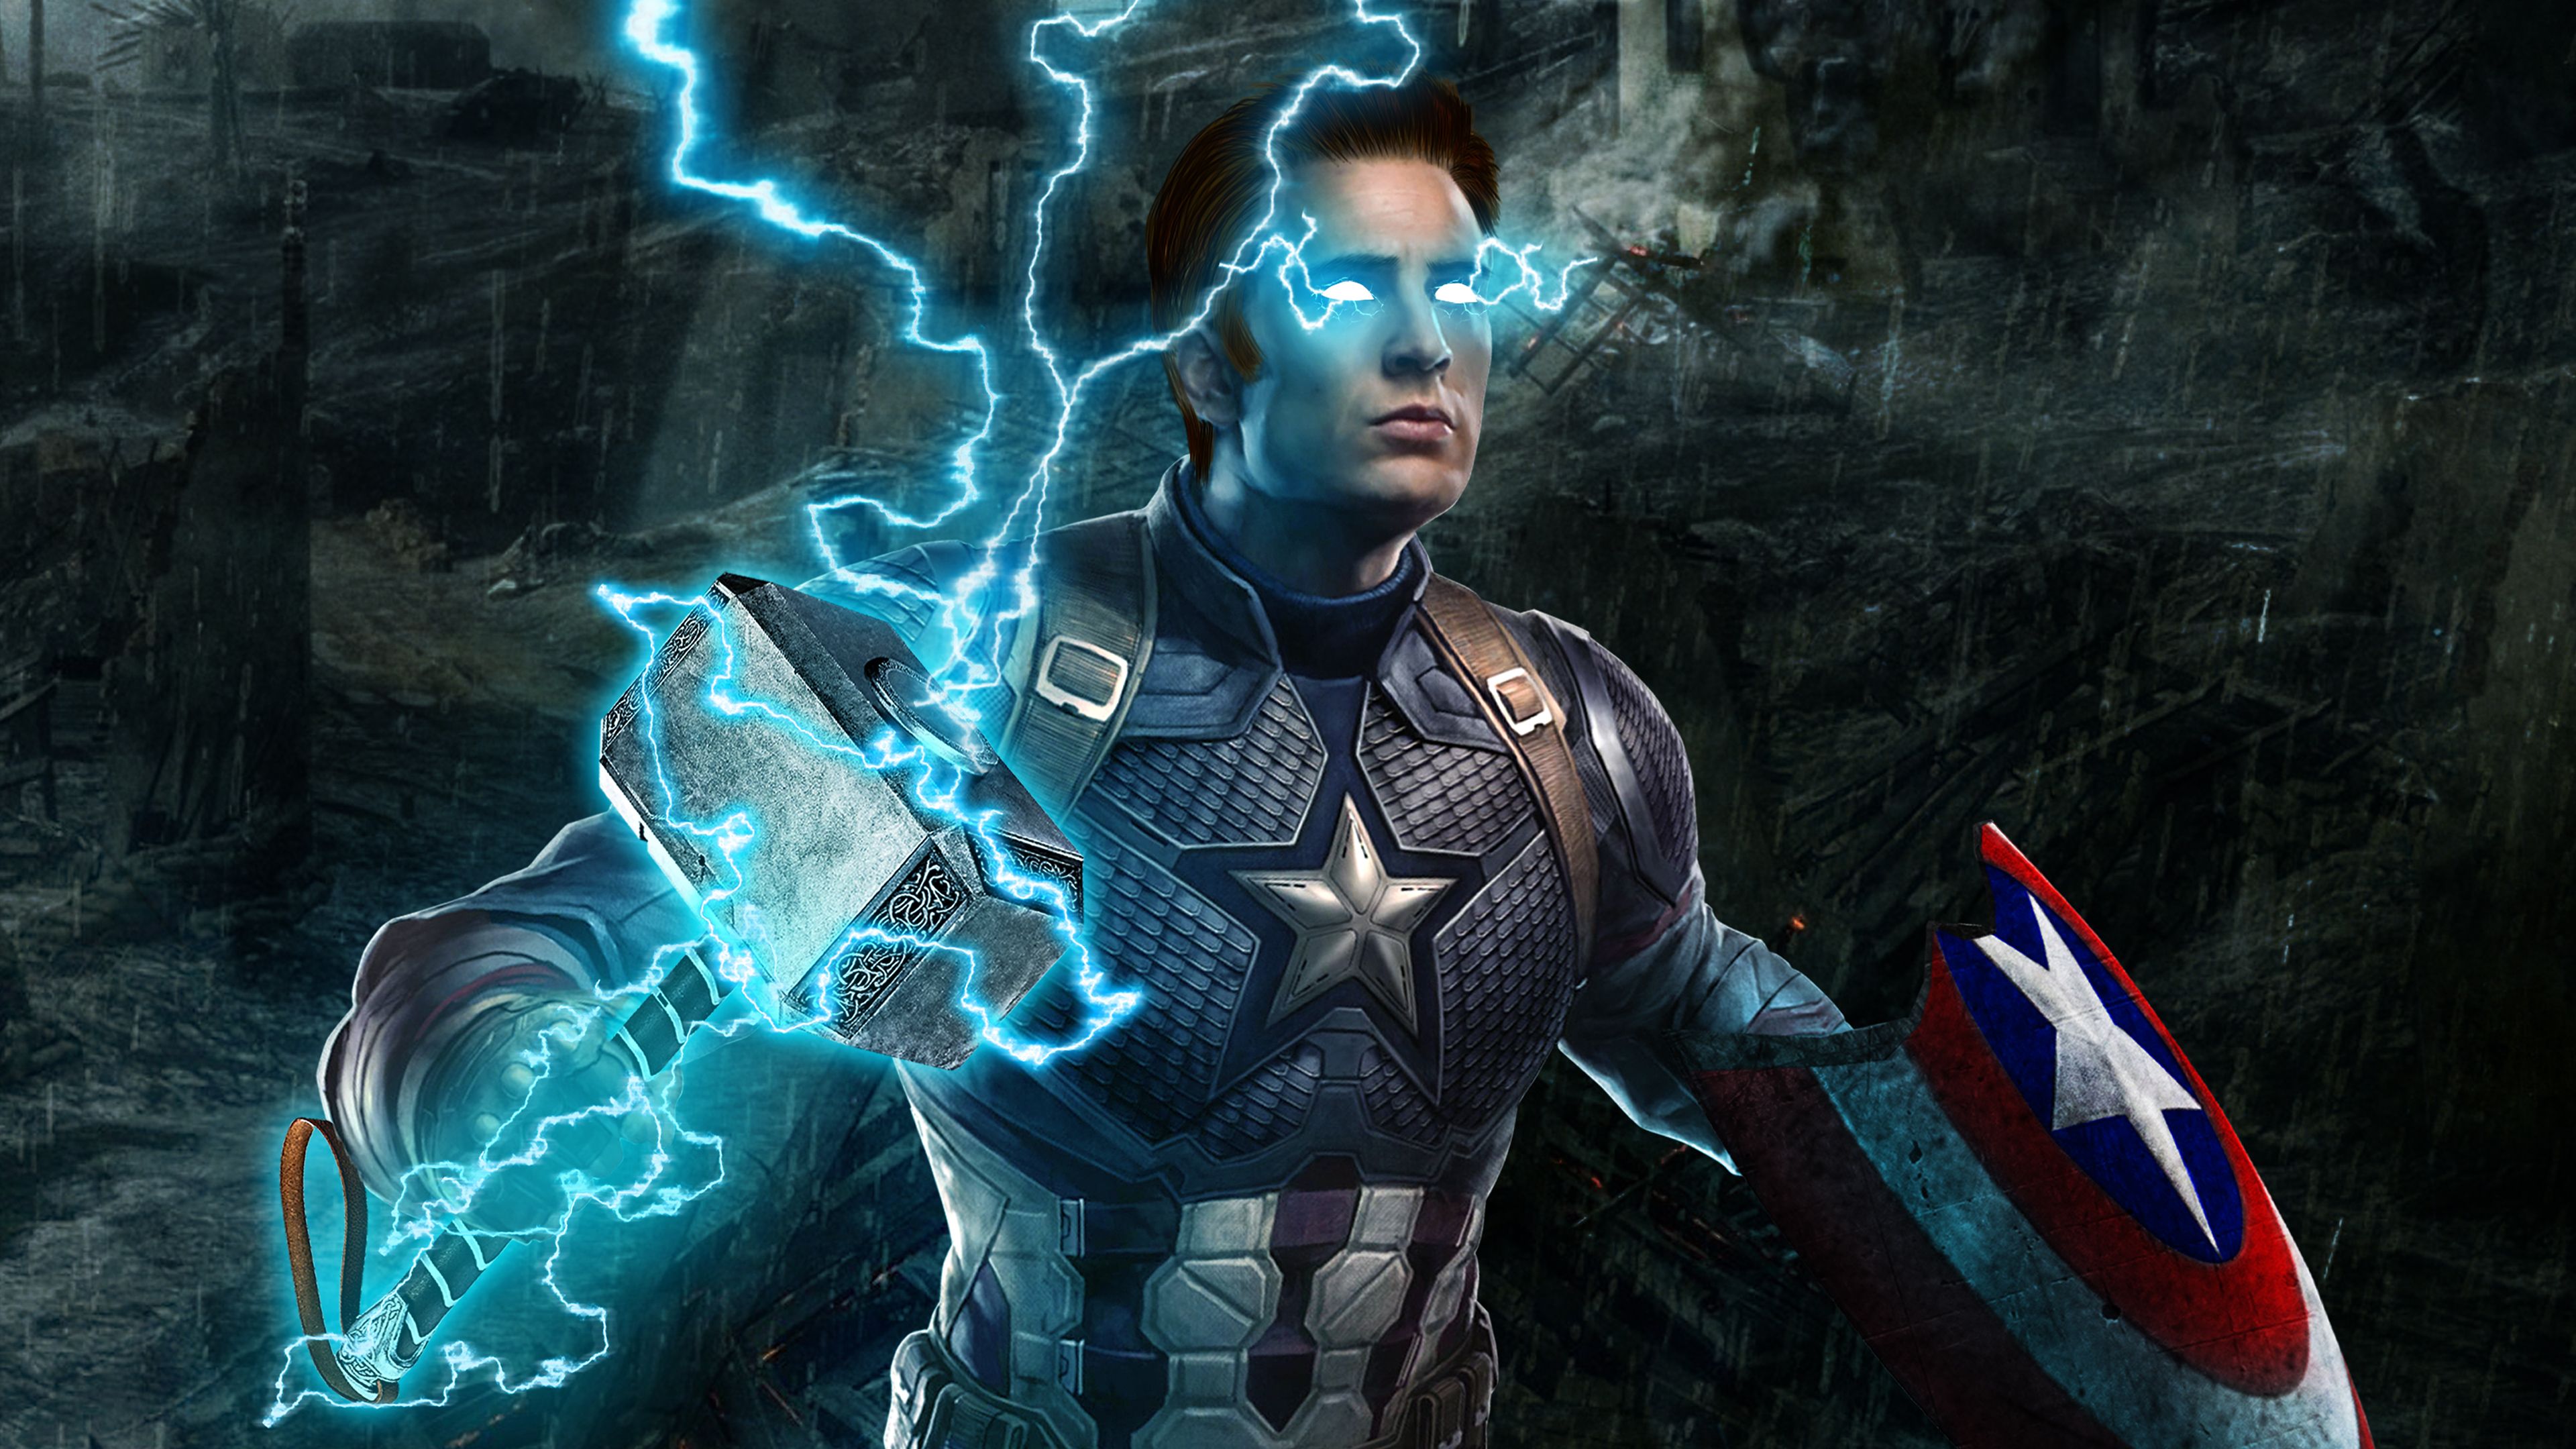 Captain America Mjolnir Avengers Endgame 4k Laptop Full HD 1080P HD 4k Wallpaper, Image, Background, Photo and Picture